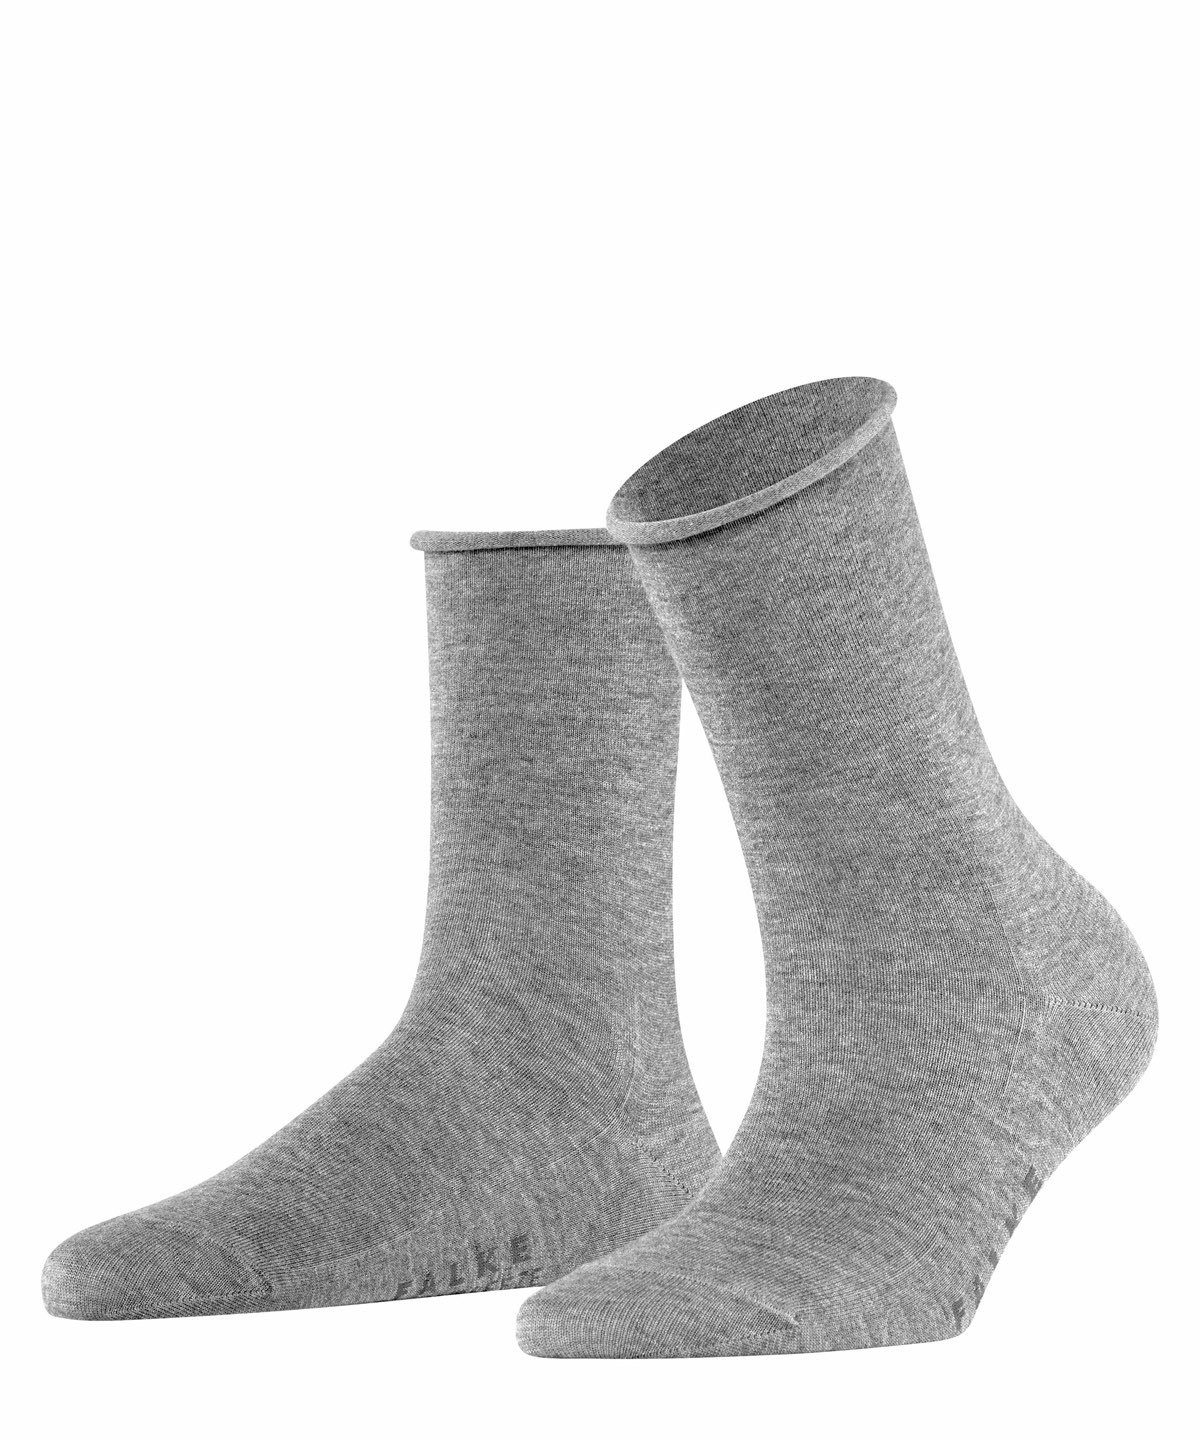 FALKE Kurzsocken Uni, Active Breeze - Damen Rollbündchen Socken Grau